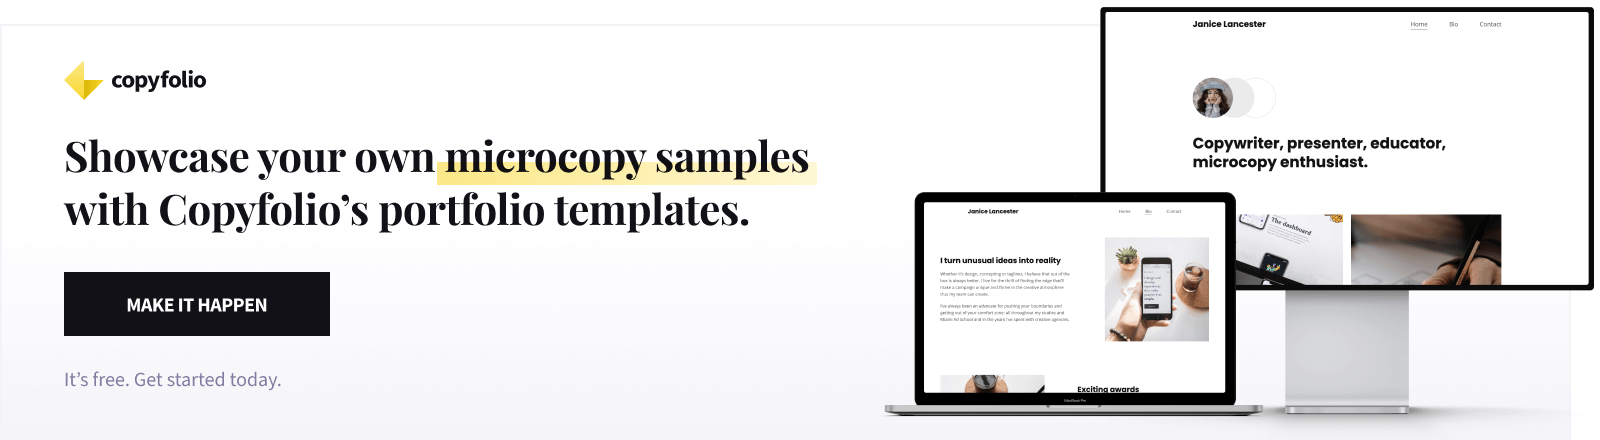 Showcase your own microcopy samples with Copyfolio's portfolio templates.